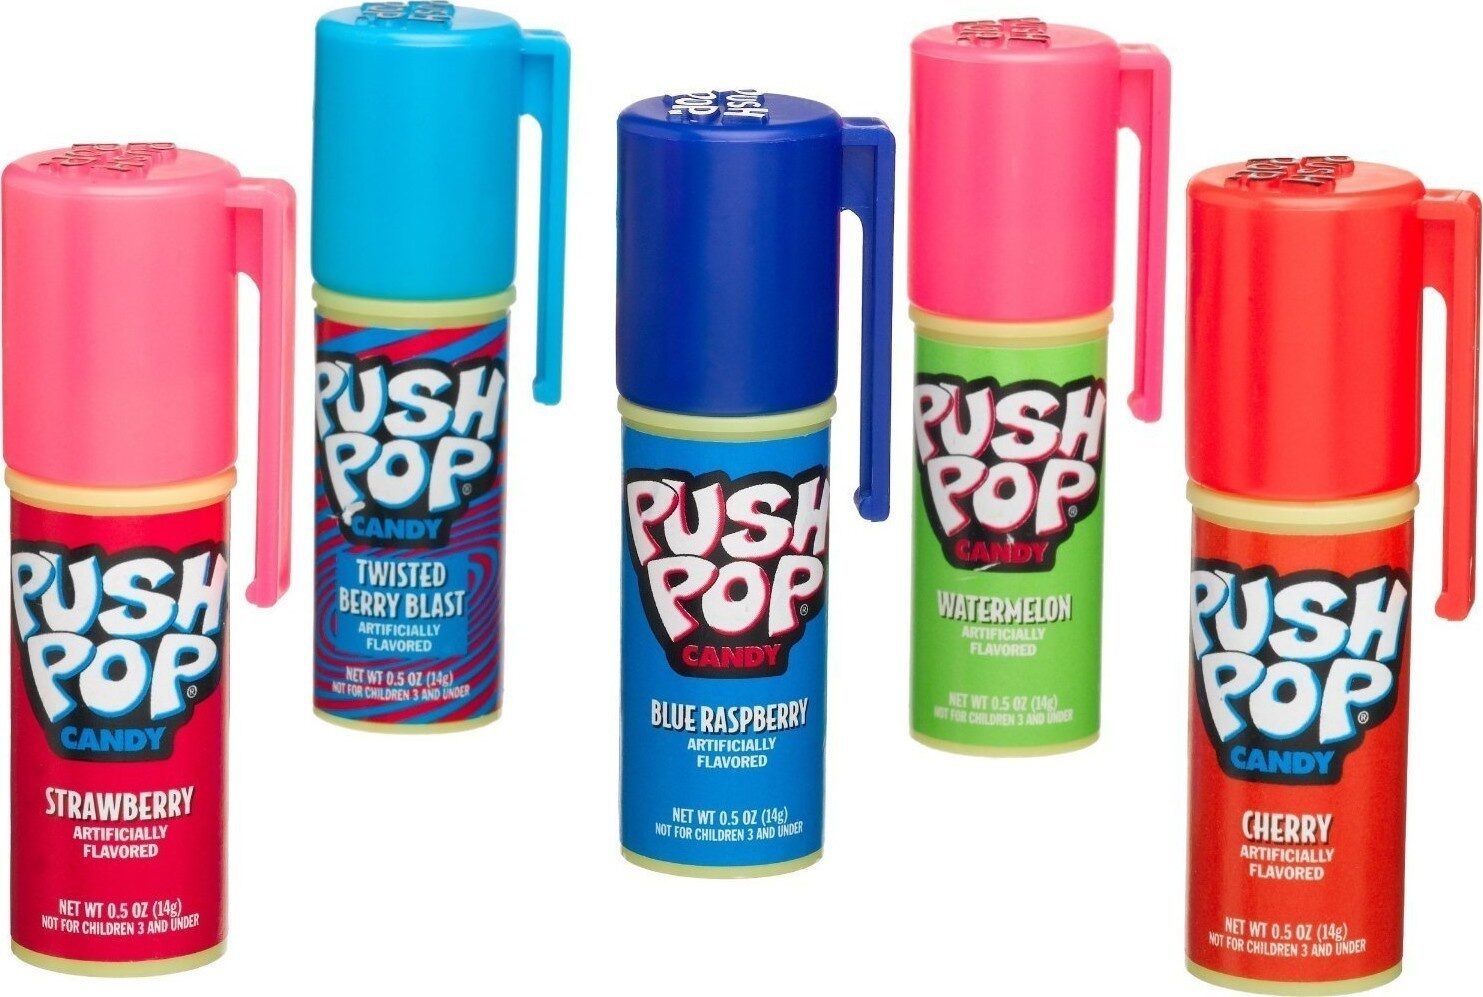 Push Pop Assortment - Product